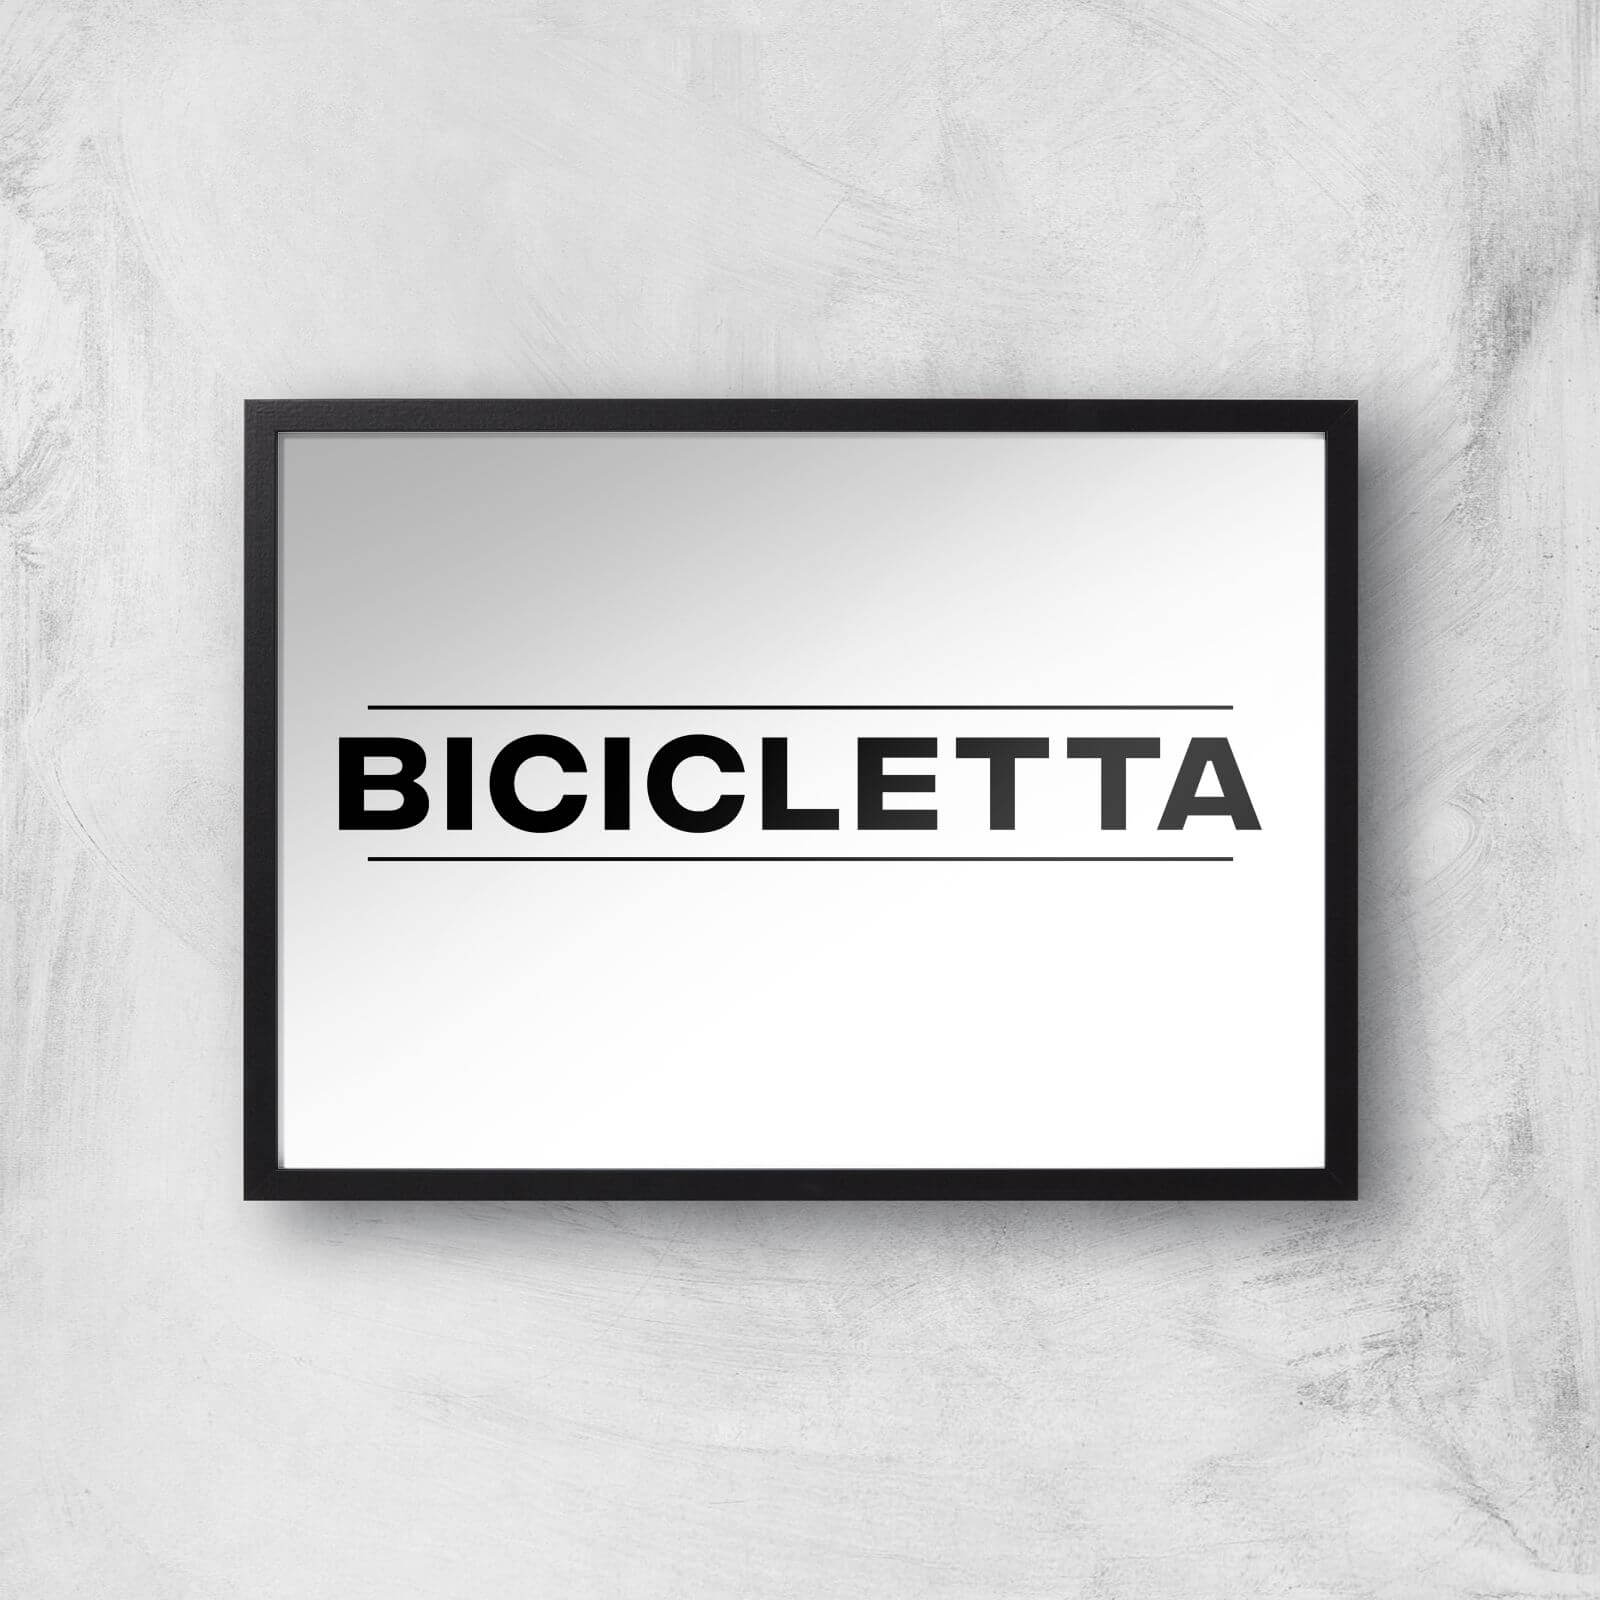 PBK Bicicletta Giclee Art Print - A4 - Black Frame